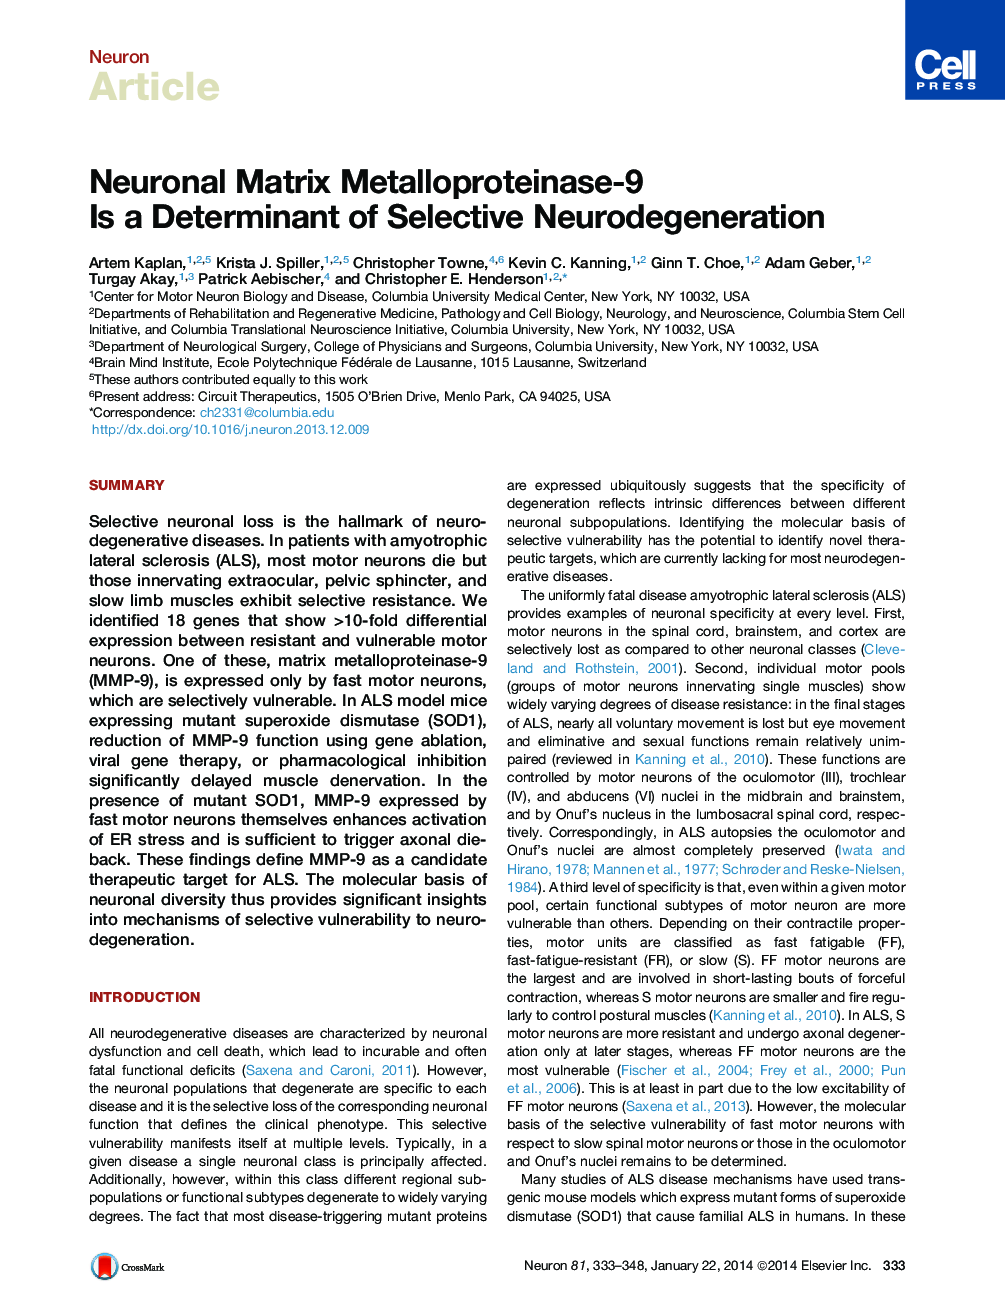 Neuronal Matrix Metalloproteinase-9 Is a Determinant of Selective Neurodegeneration